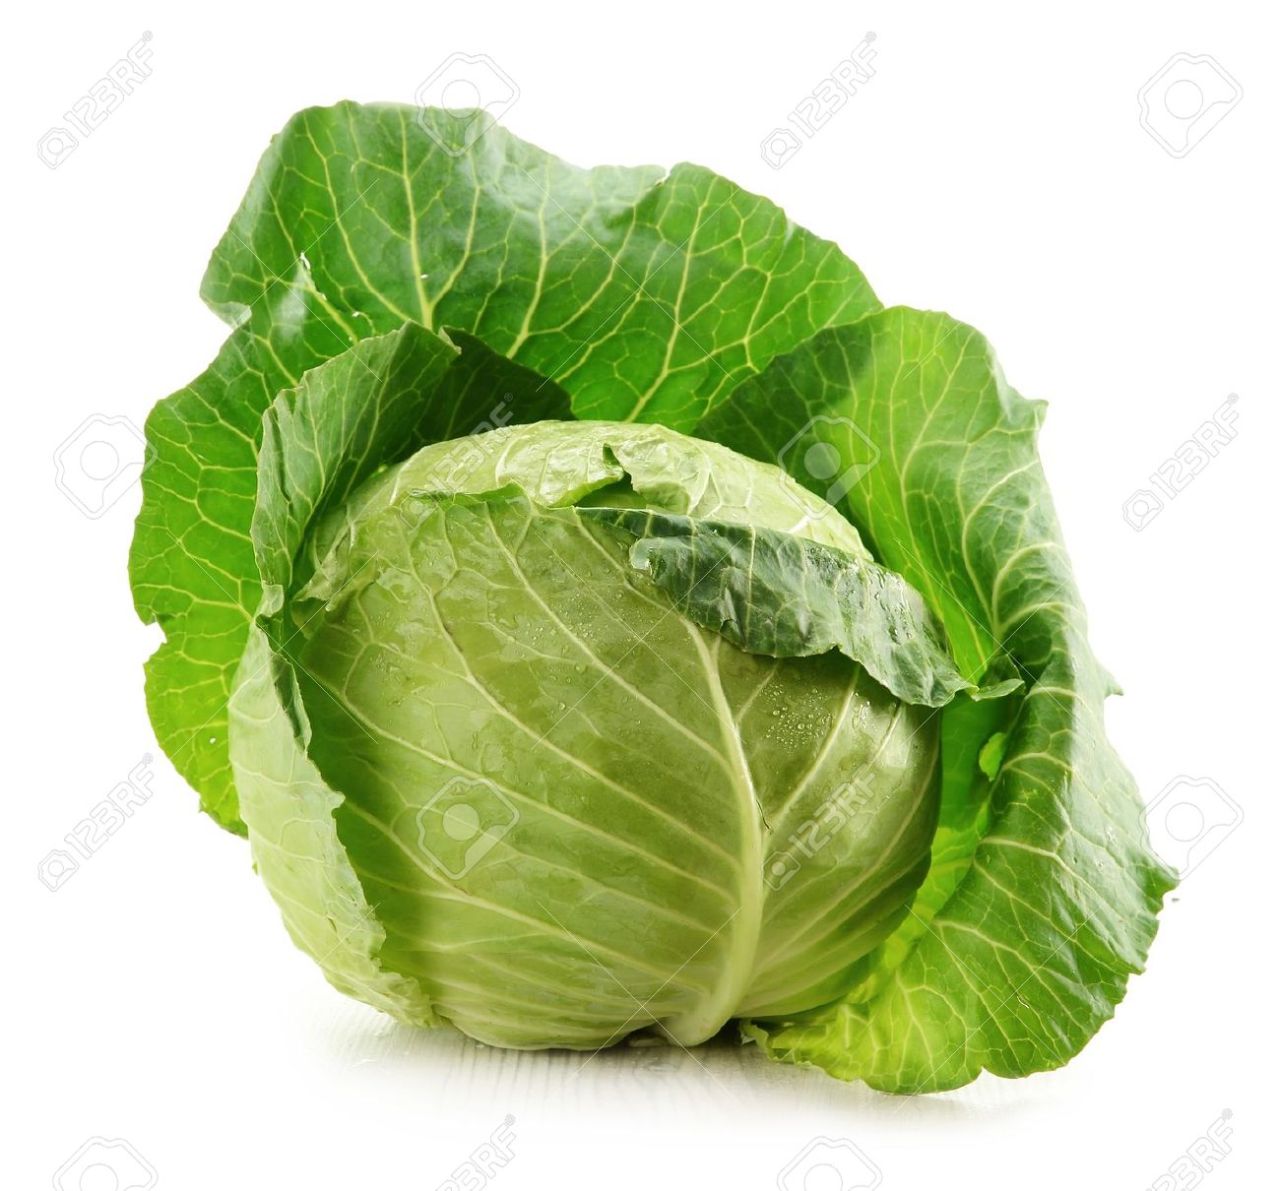 Cabbage Juice Cures 100 of Diseases! â€“  http://ift.tt/1iPPSHZ